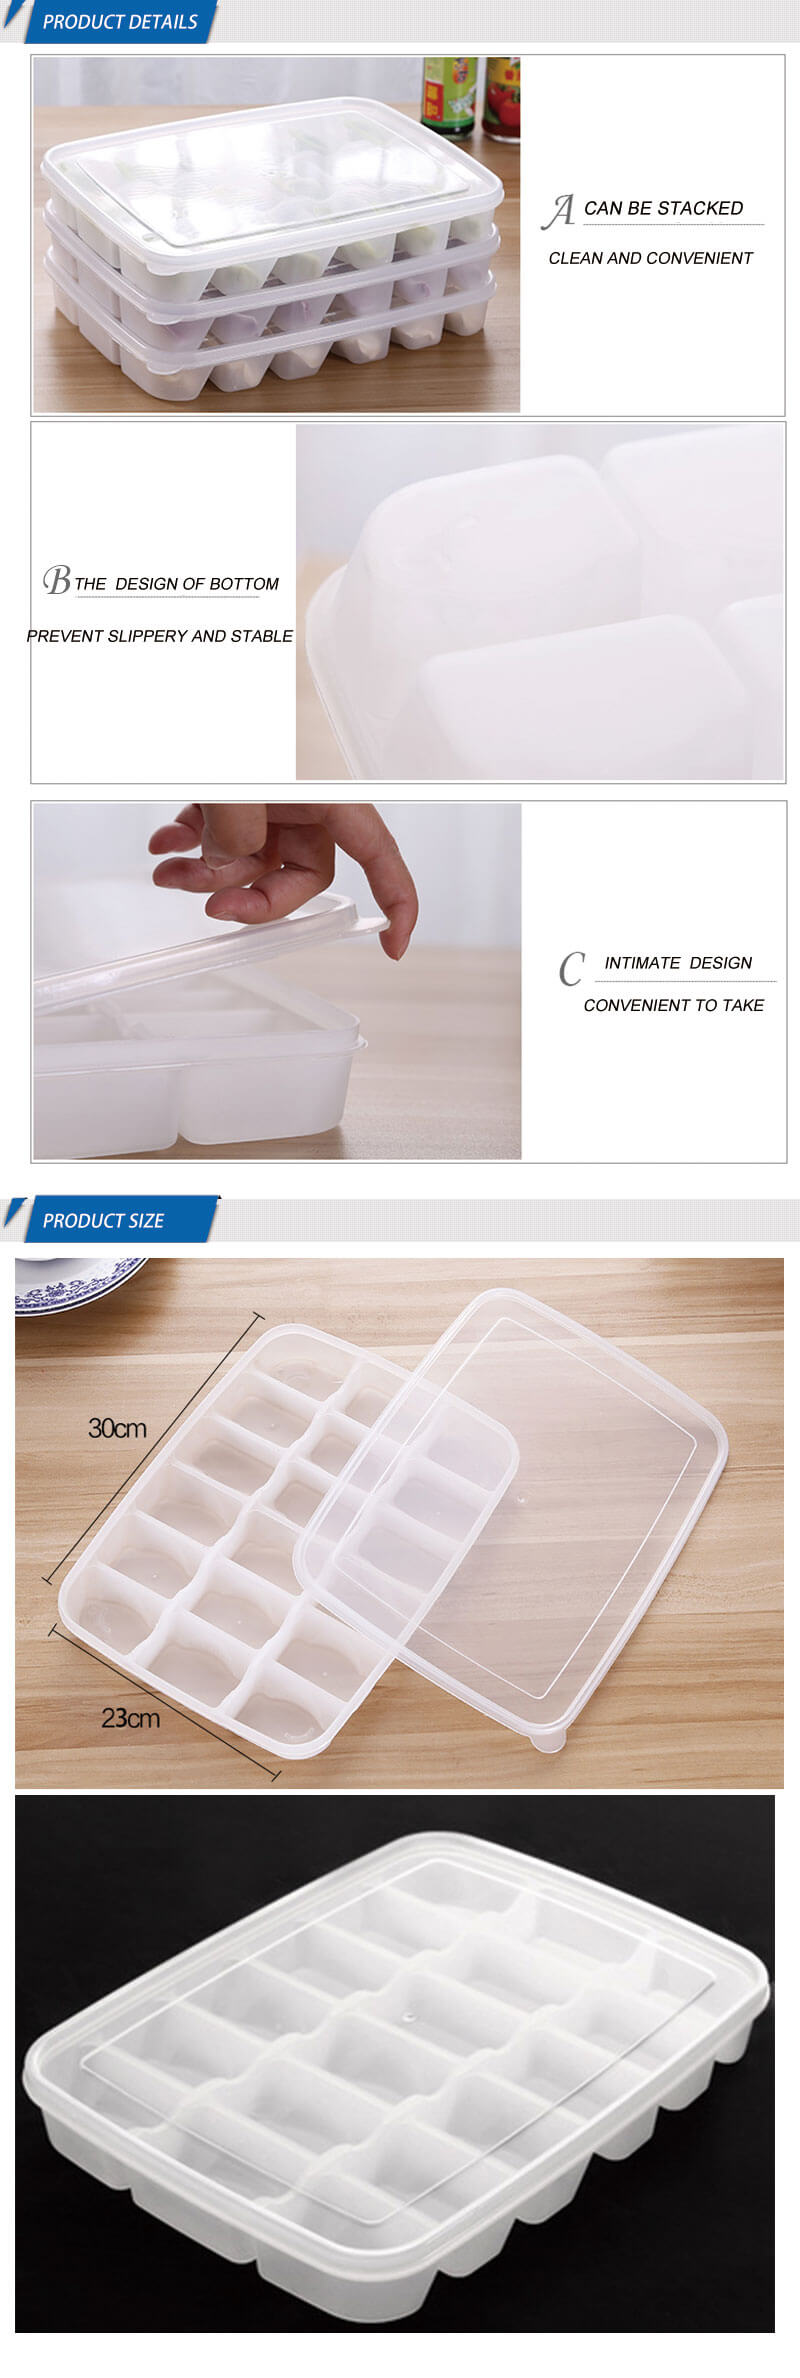 Transparent Food Grade Plastic Refrigerated Dumpling Storage Box